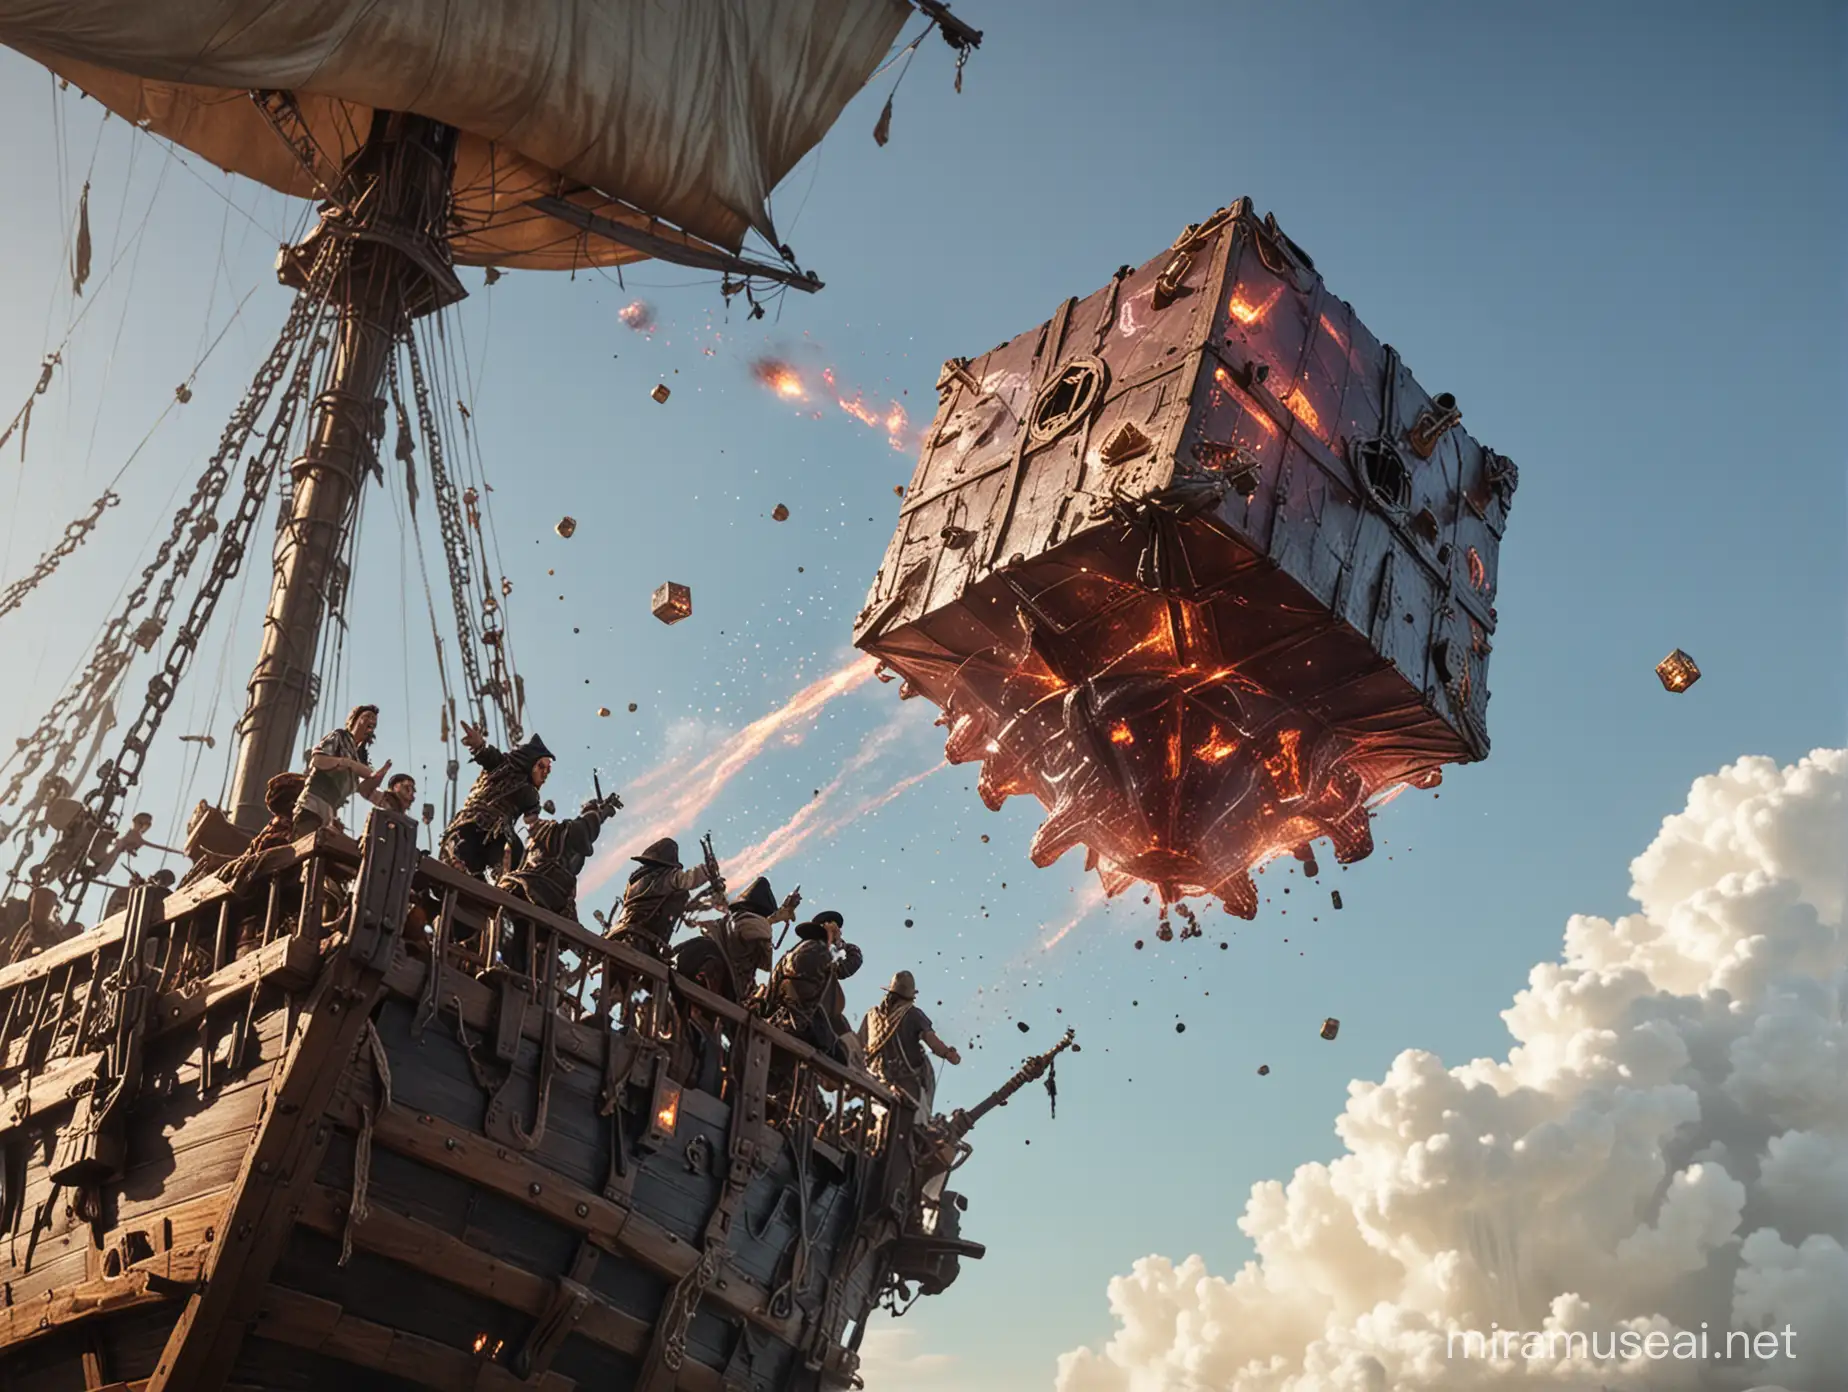 Pirate Ship Catapult Launching Gelatinous Cube